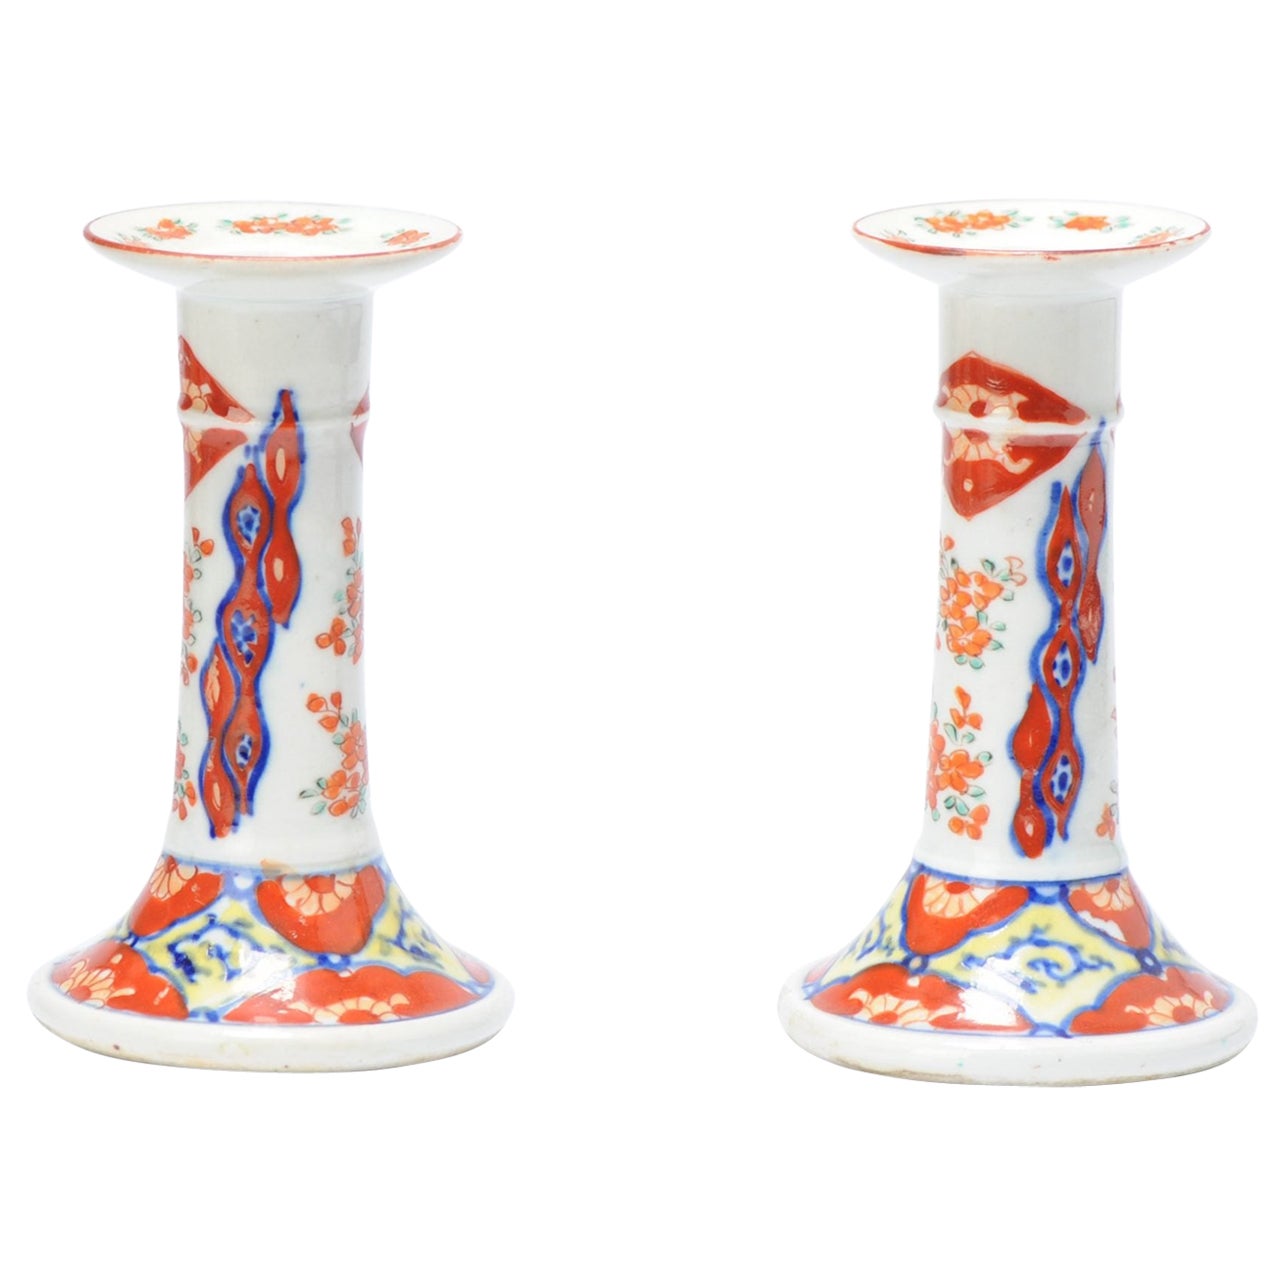 Antique Japanese Porcelain Candle Sticks Edo or Meiji Period, 19th Century